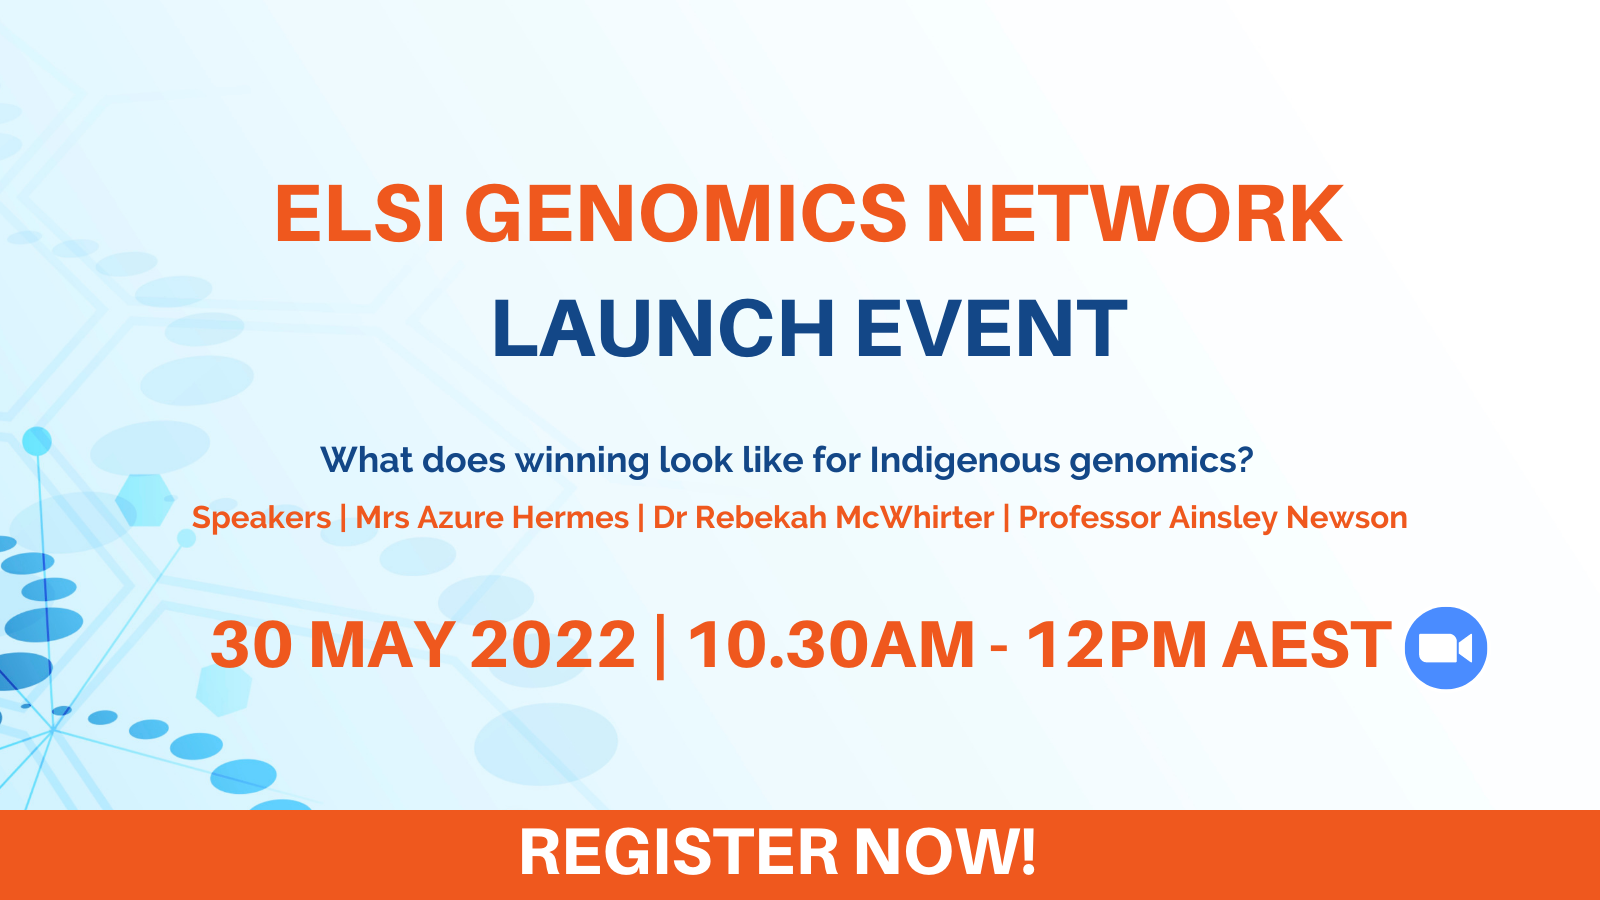 ELSI Genomics Network launch event promotion artwork